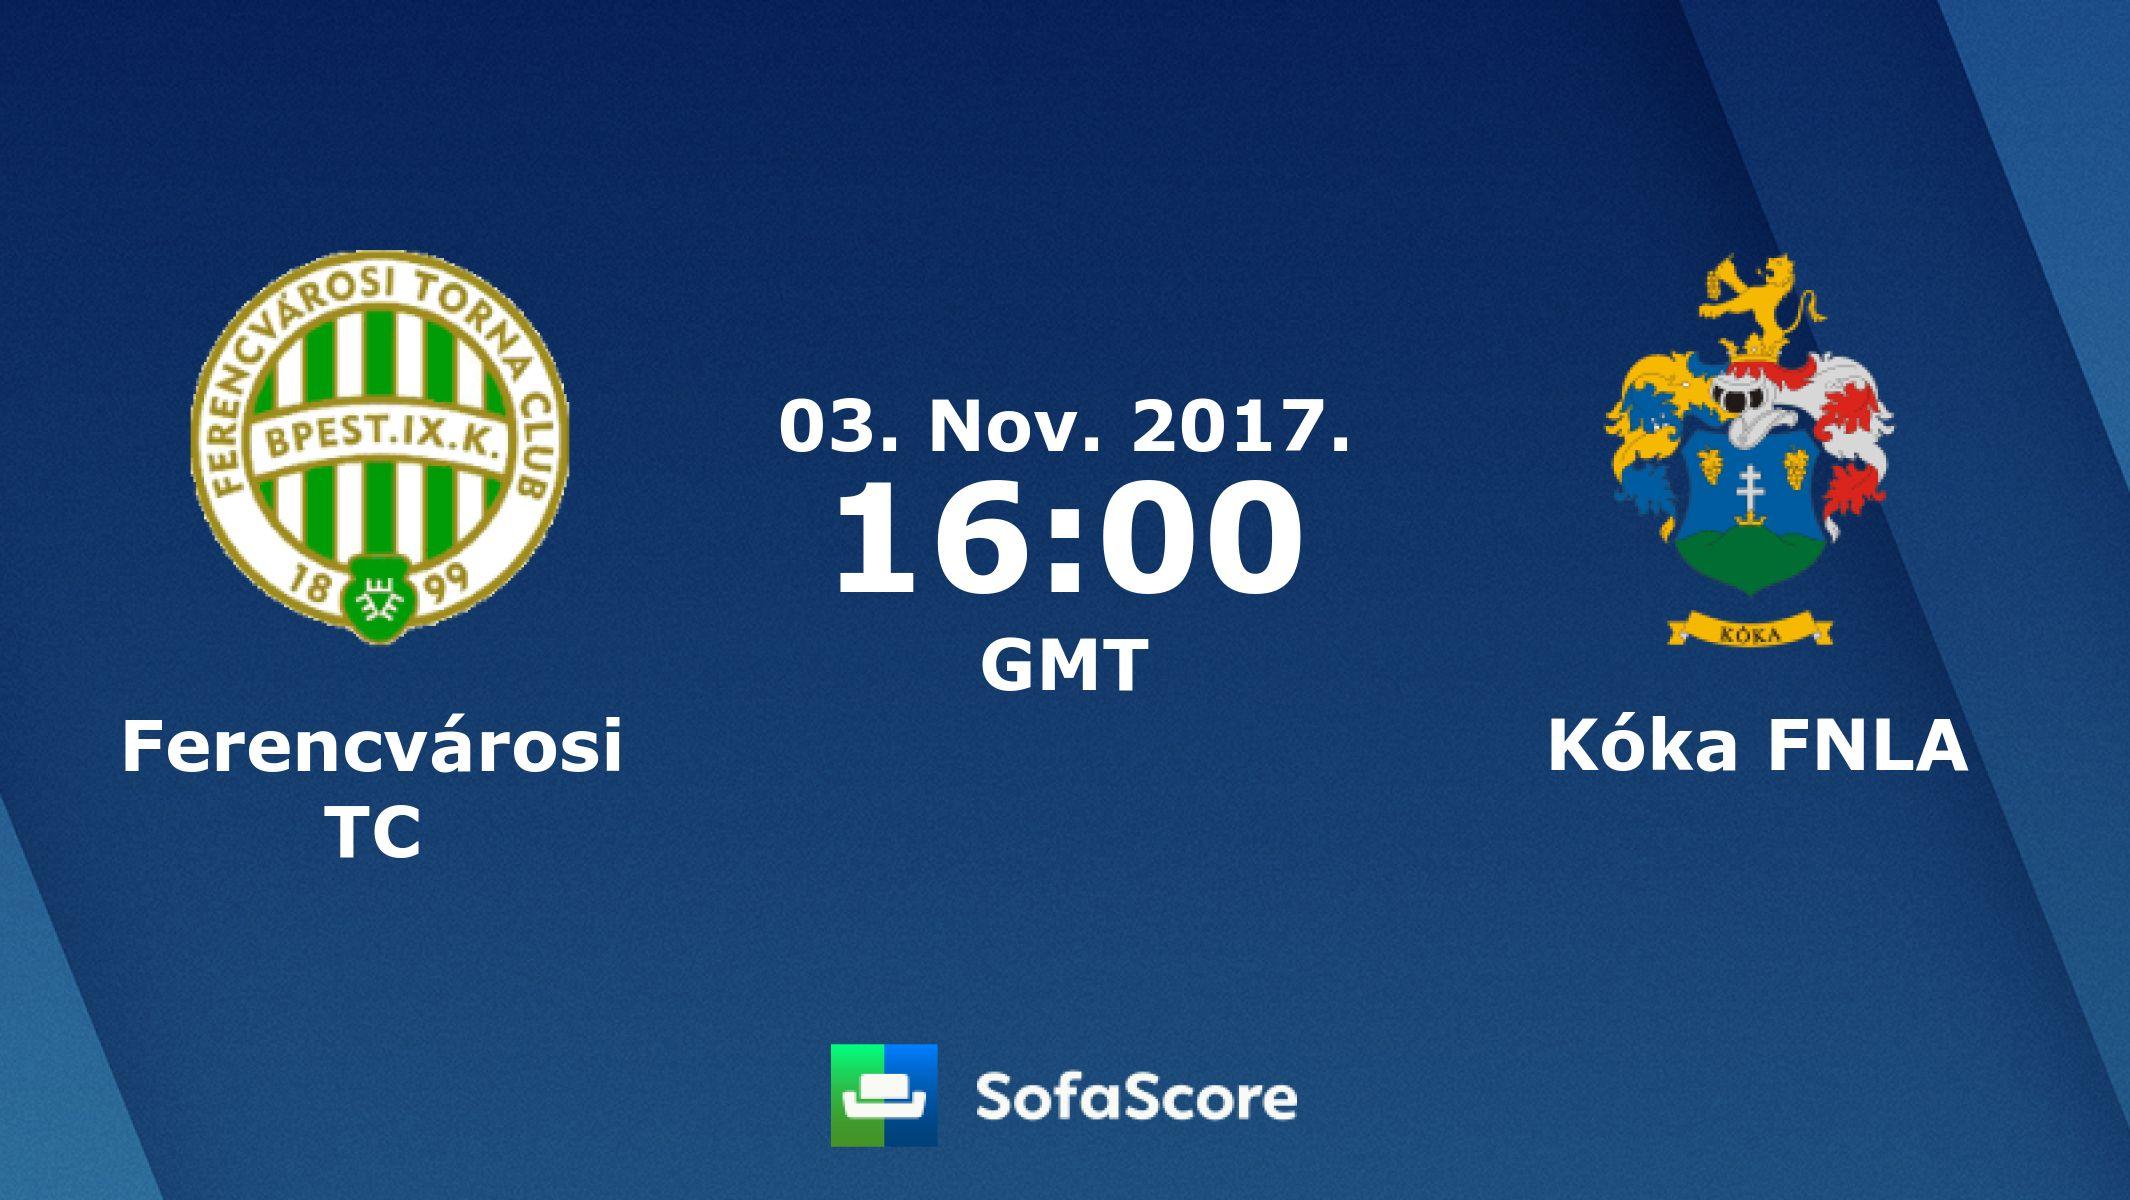 FNLA Logo - Ferencvárosi TC Kóka FNLA live score, video stream and H2H results